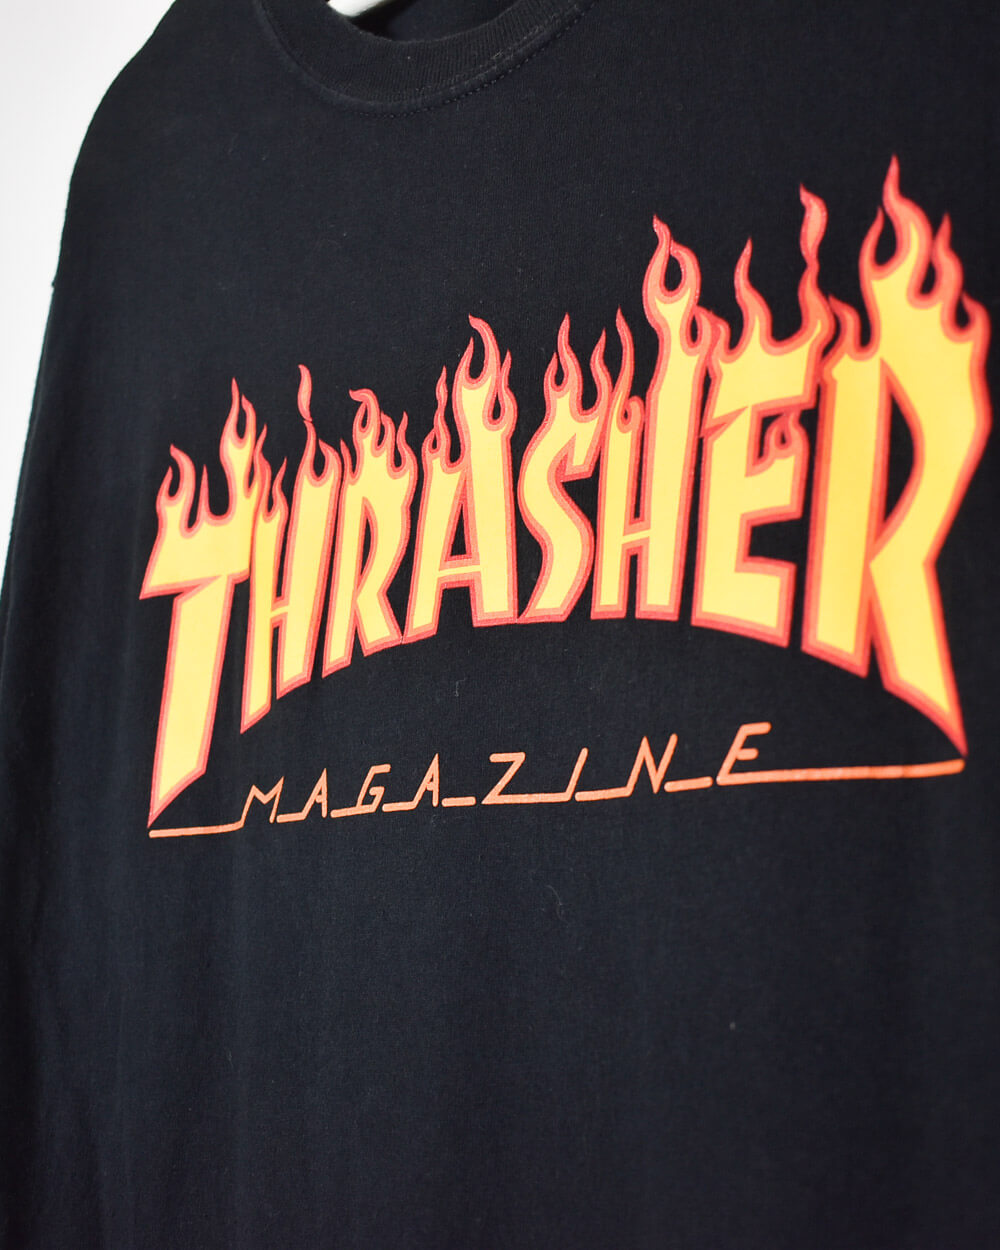 Black Thrasher Magazine San Francisco Long Sleeved T-Shirt - Medium